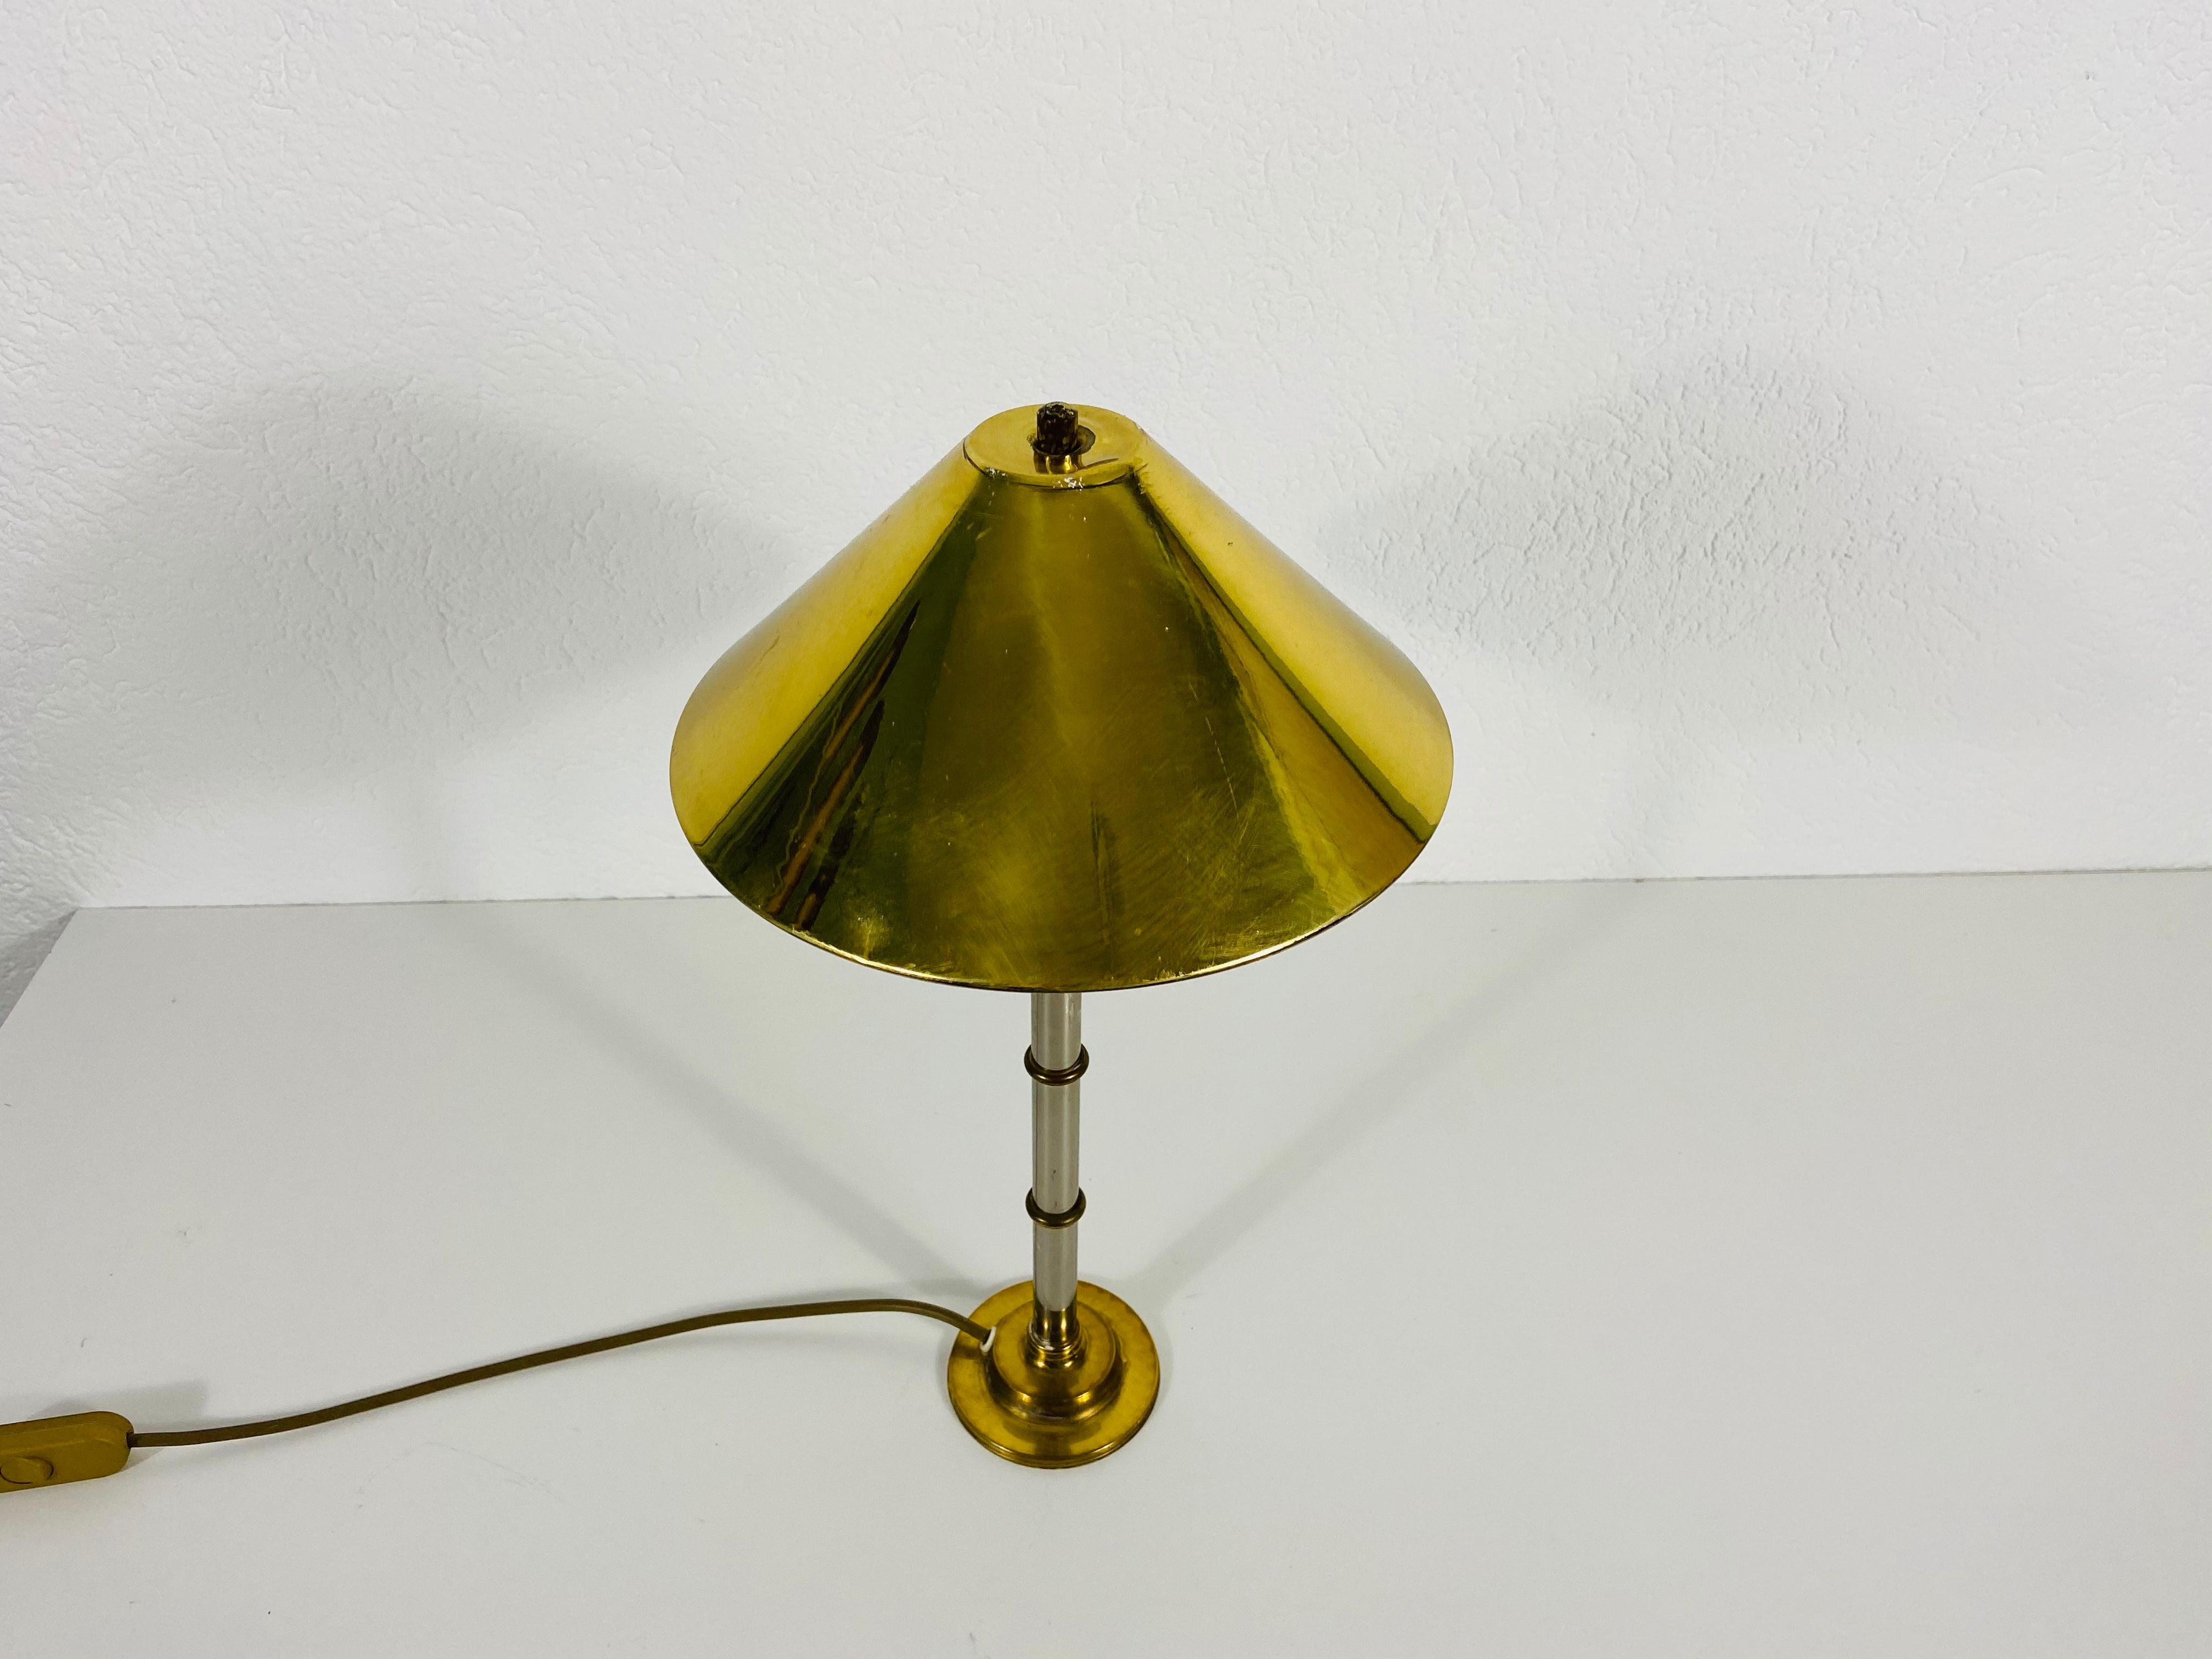 German Midcentury Solid Brass Table Lamp by Vereinigte Werkstätte, 1960s For Sale 4